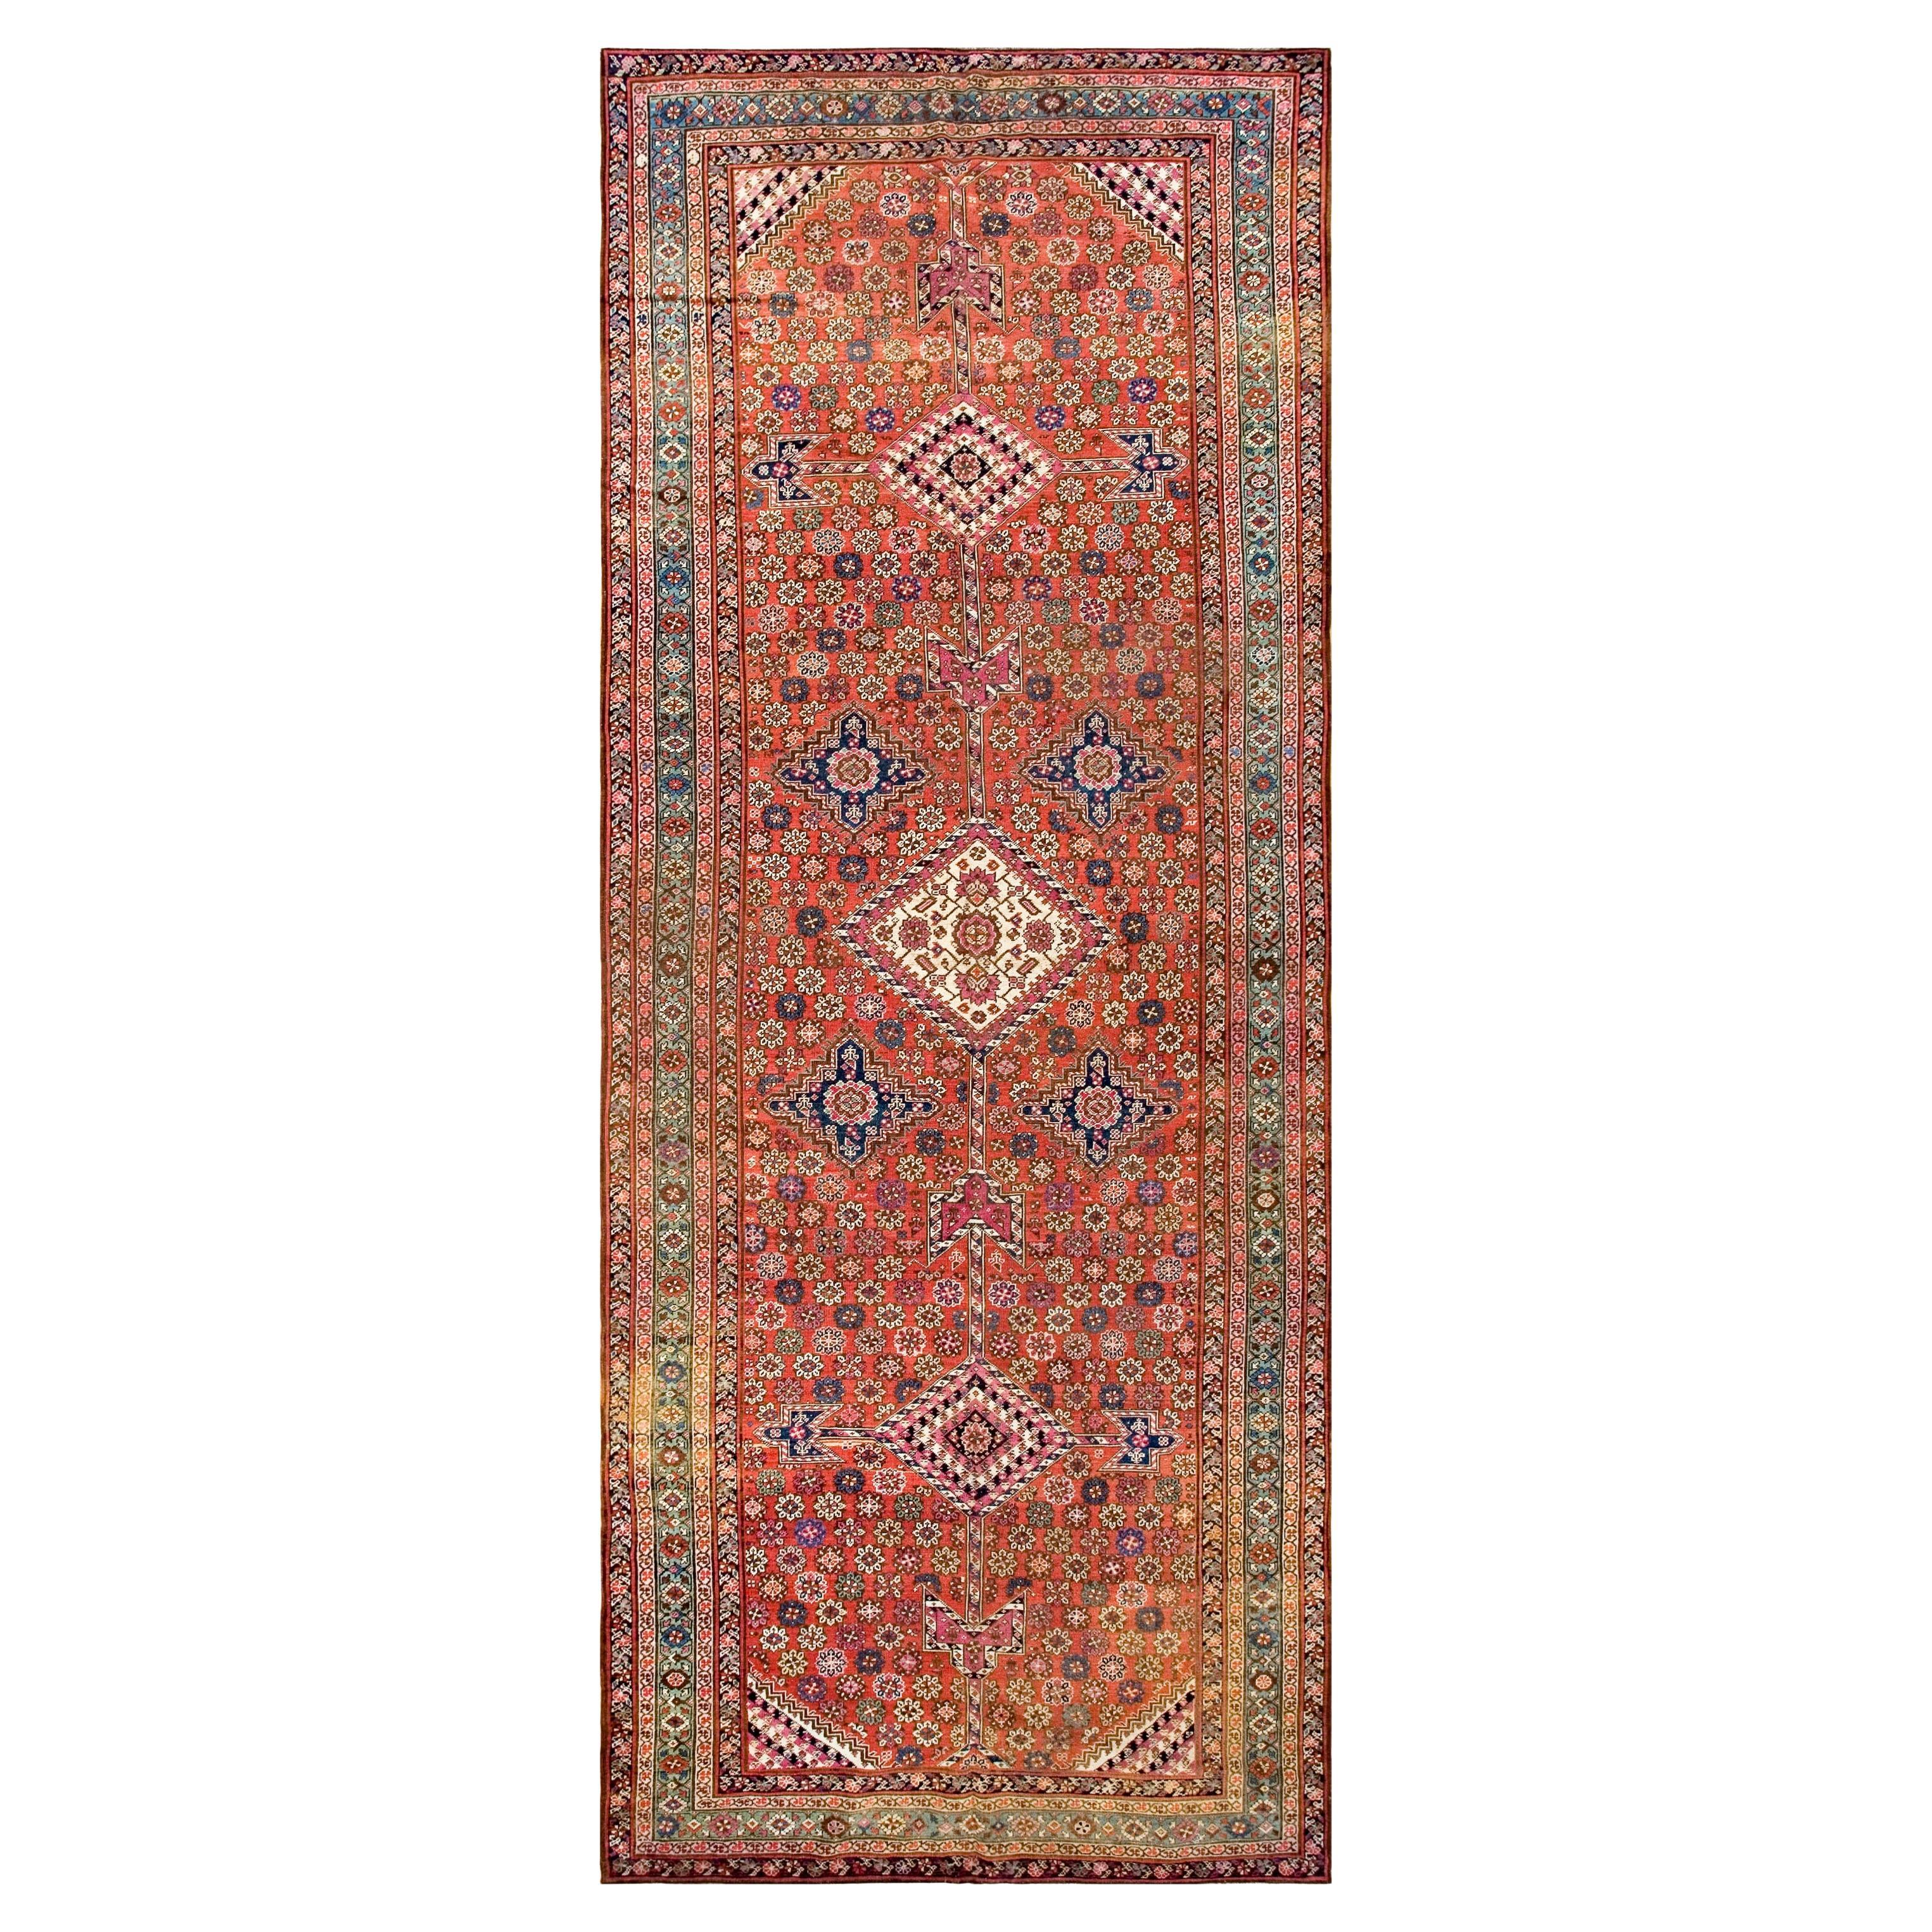 19th Century NW Persian Bakshaiesh Gallery Carpet ( 6'8" x 17' - 203 x 518 cm )